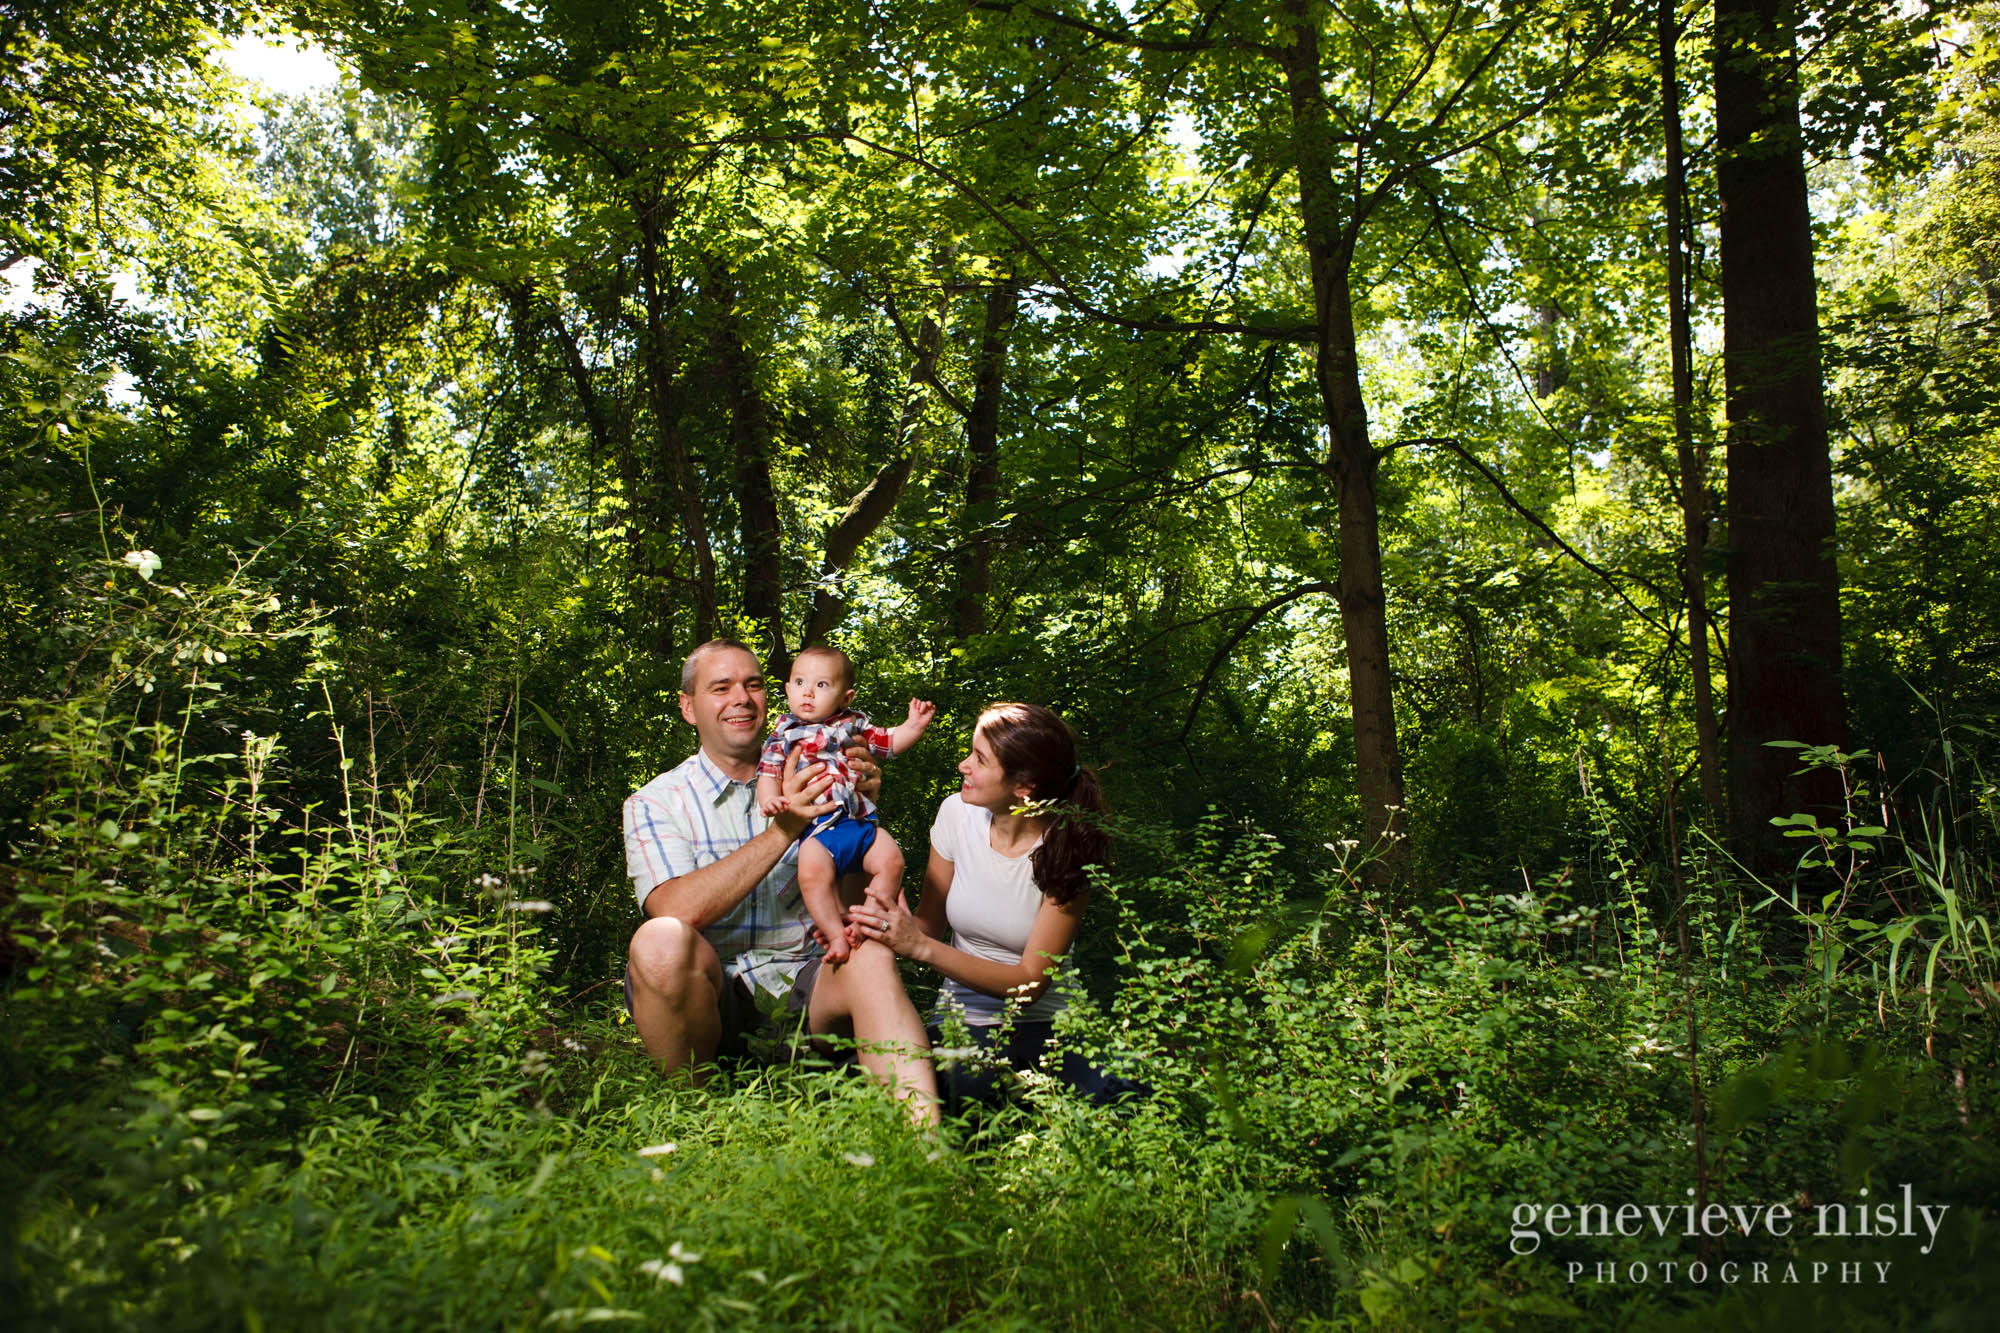  Copyright Genevieve Nisly Photography, Family, Ohio, Peninsula, Portraits, Summer